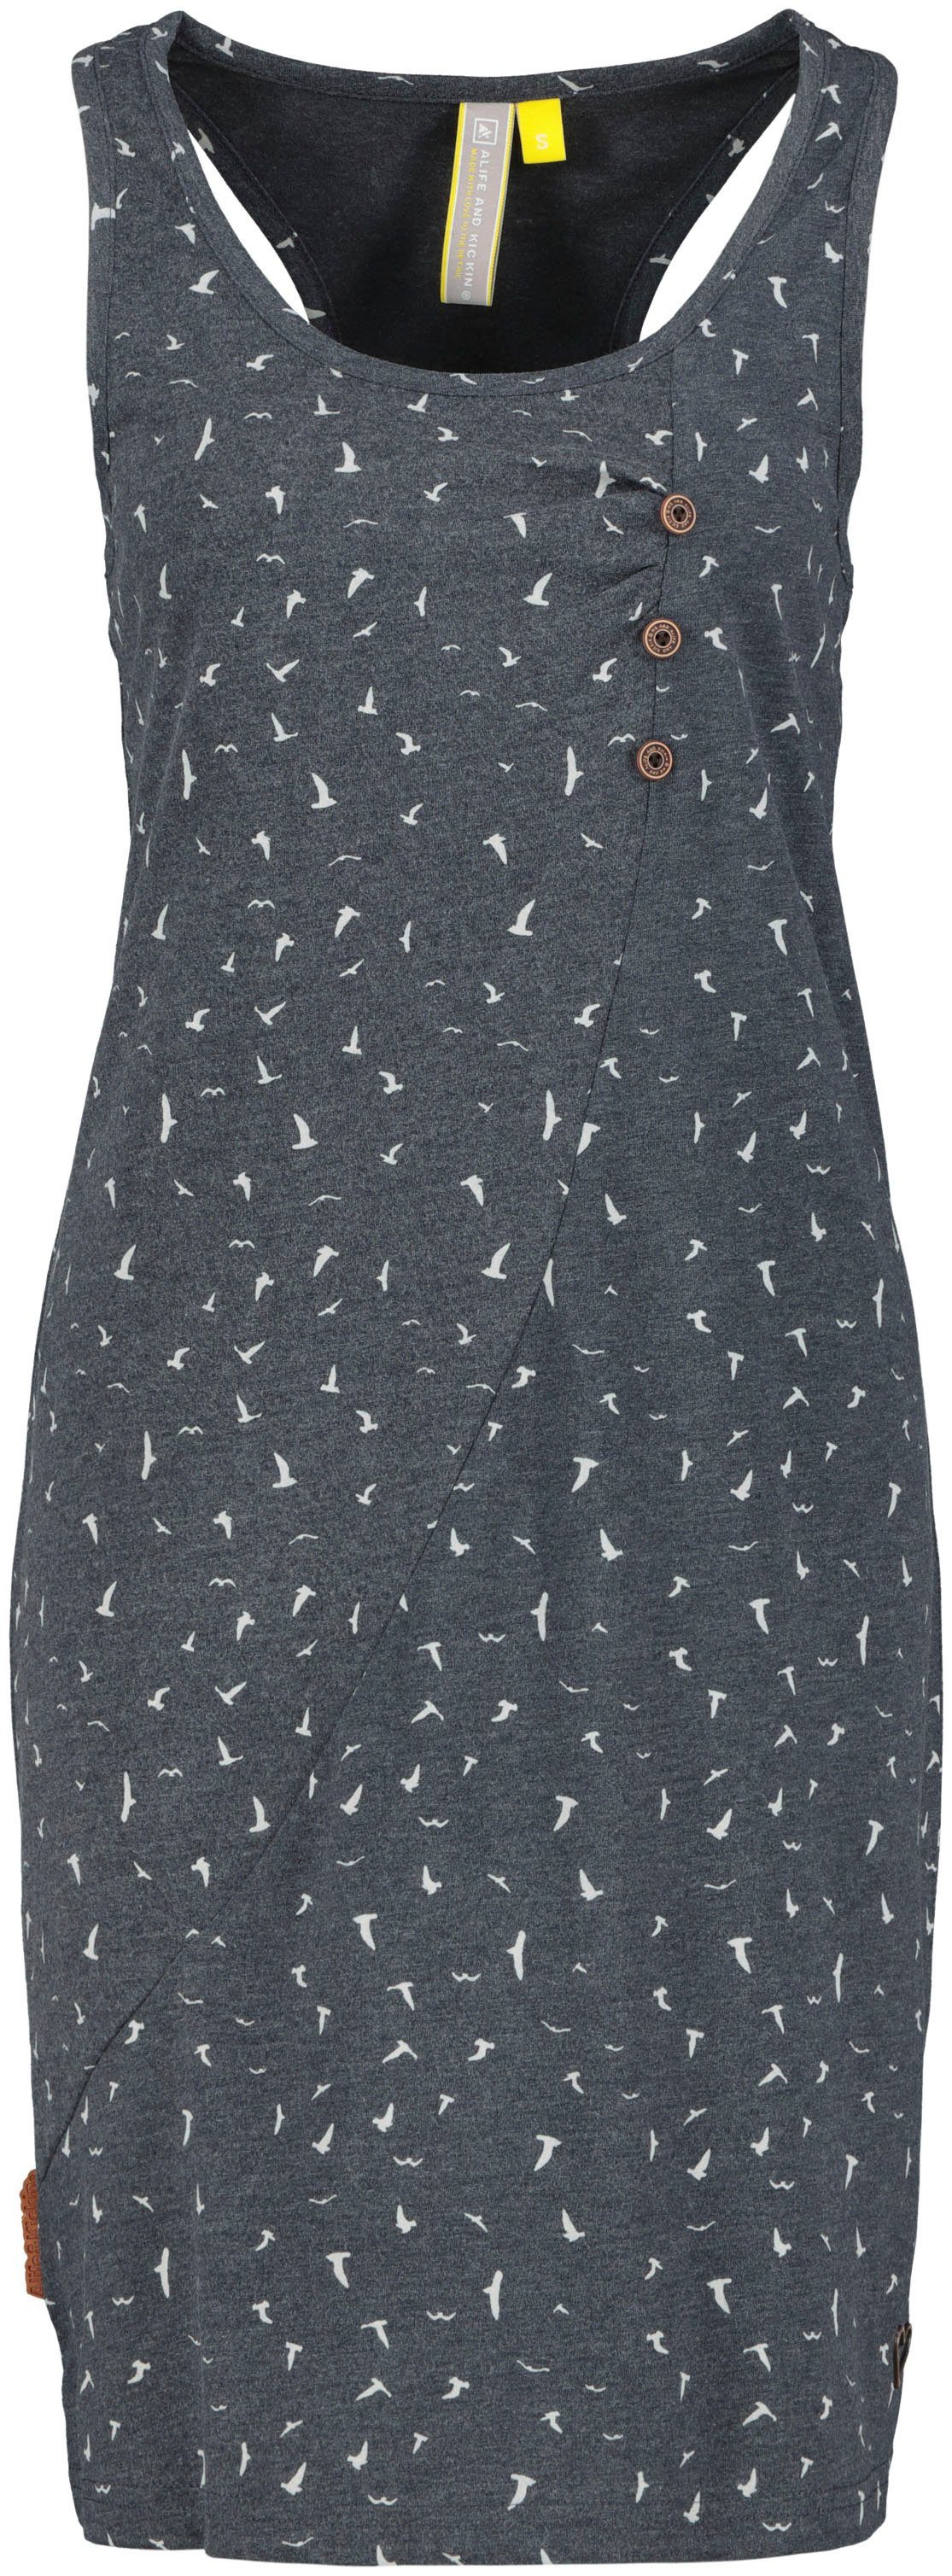 Alife & Kickin Jerseykleid süßes CamyAK Trägerkleid Alloverprint in Wickelkleid-Optik mit